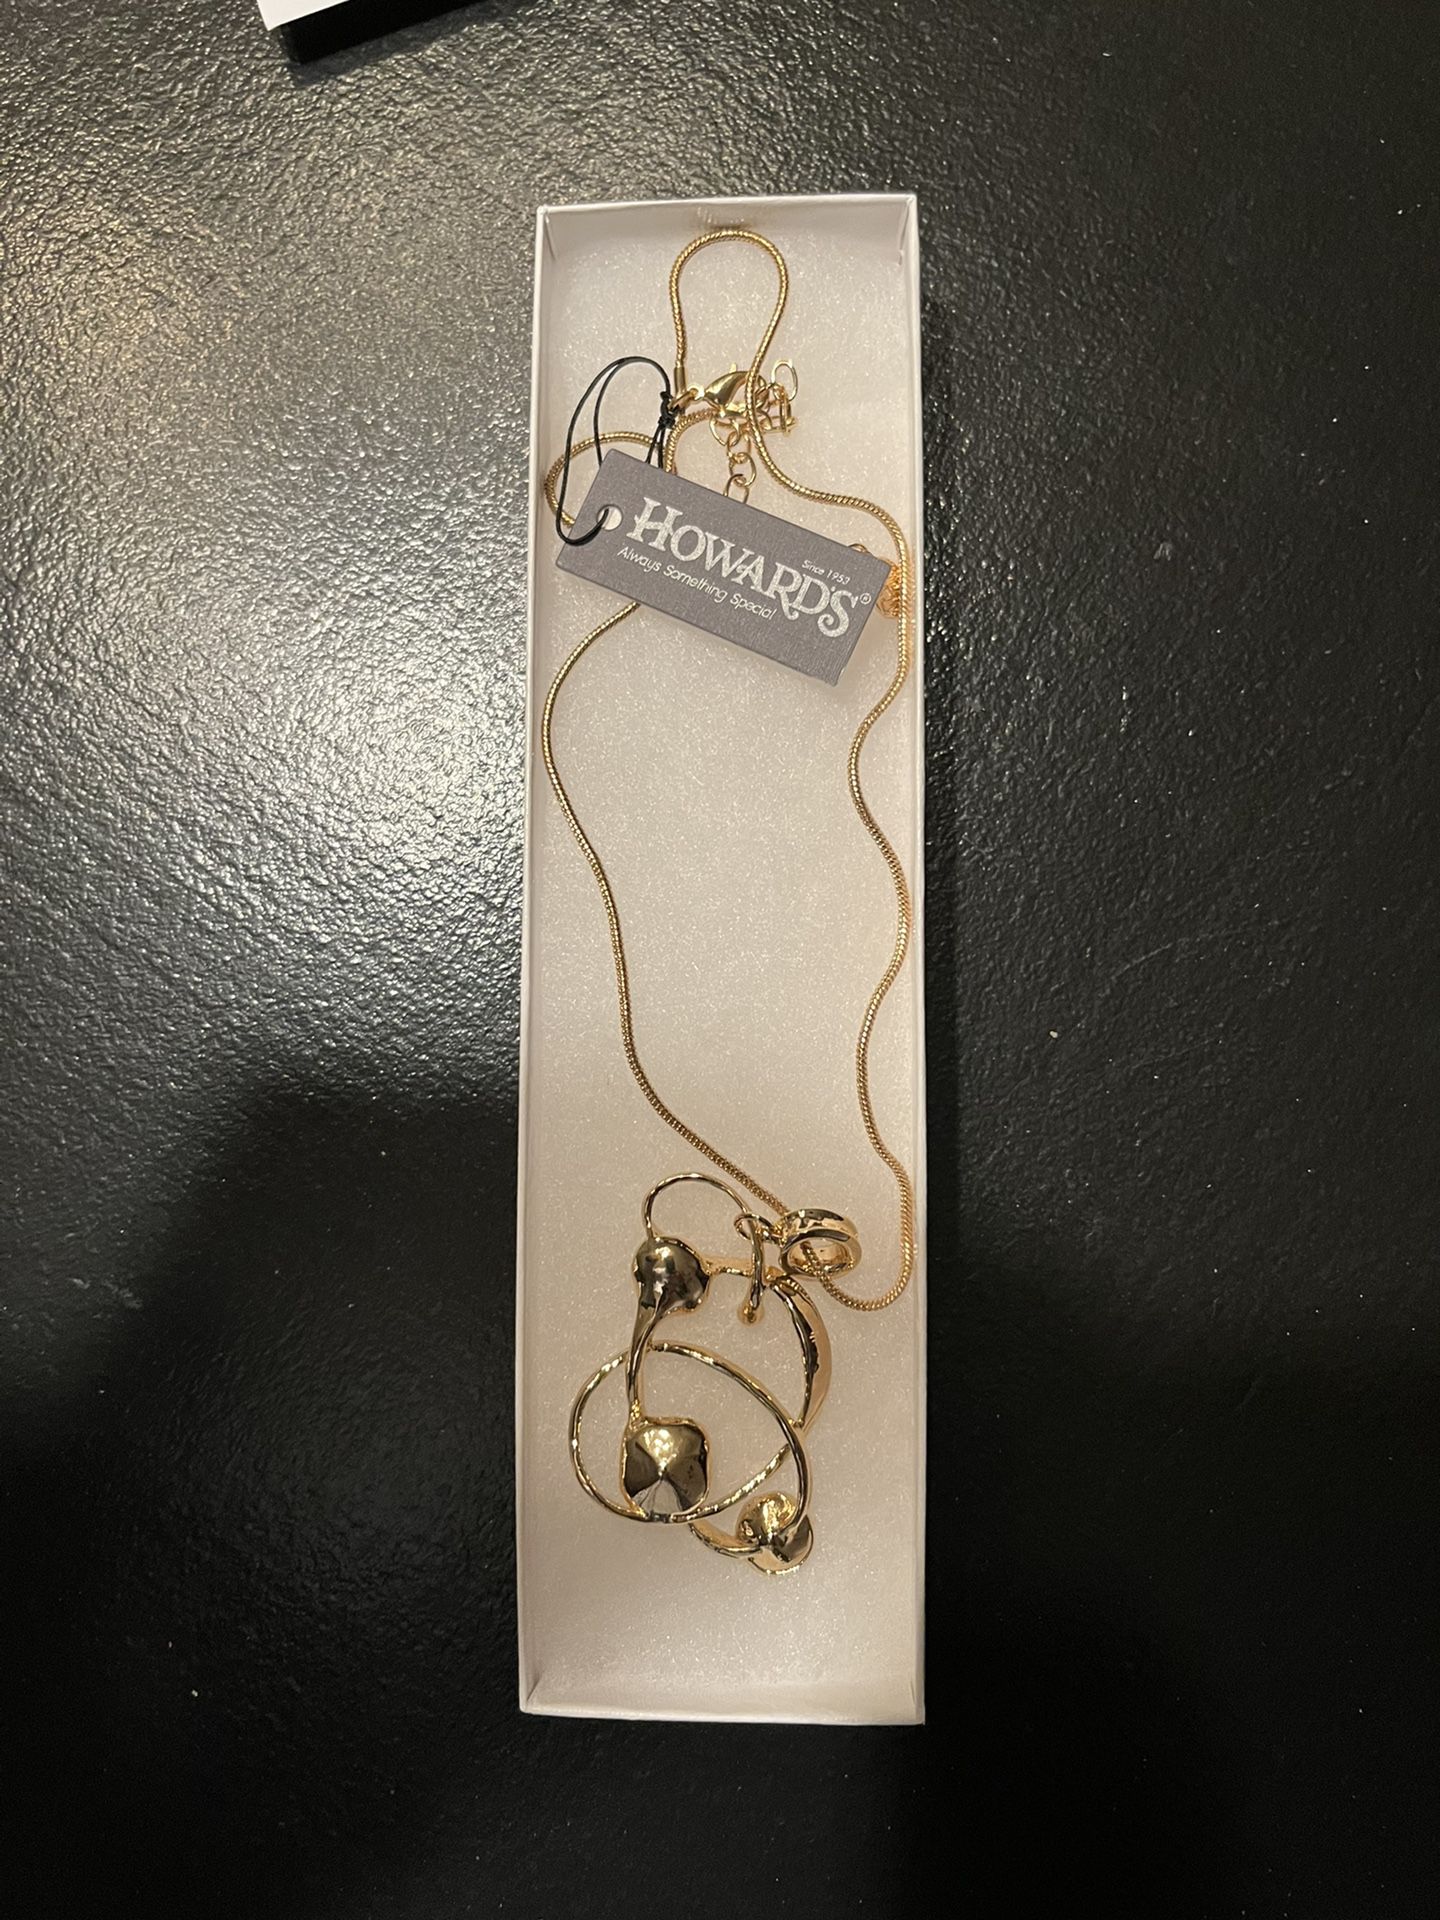 Howard’s jewelry Necklace